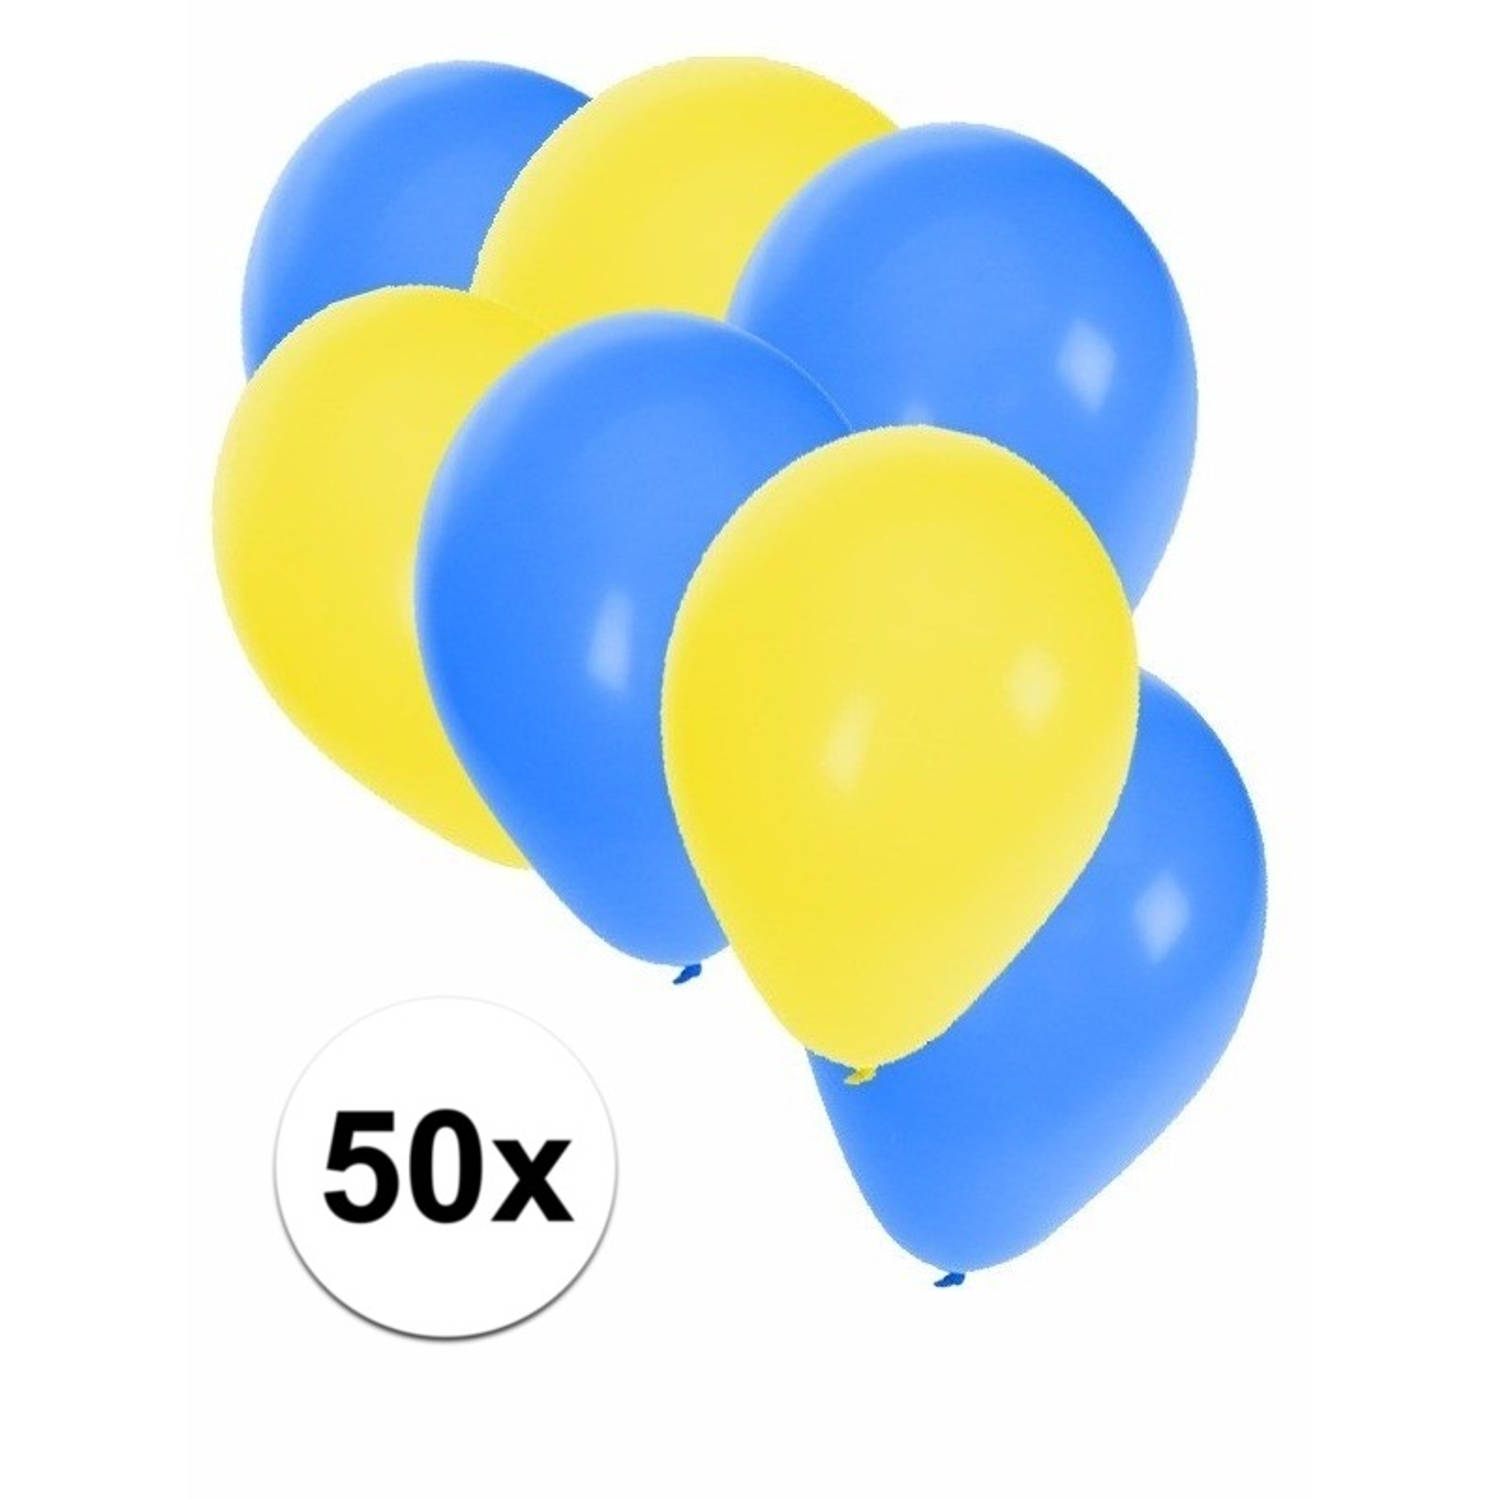 50x blauwe en gele ballonnen Ballonnen | Blokker